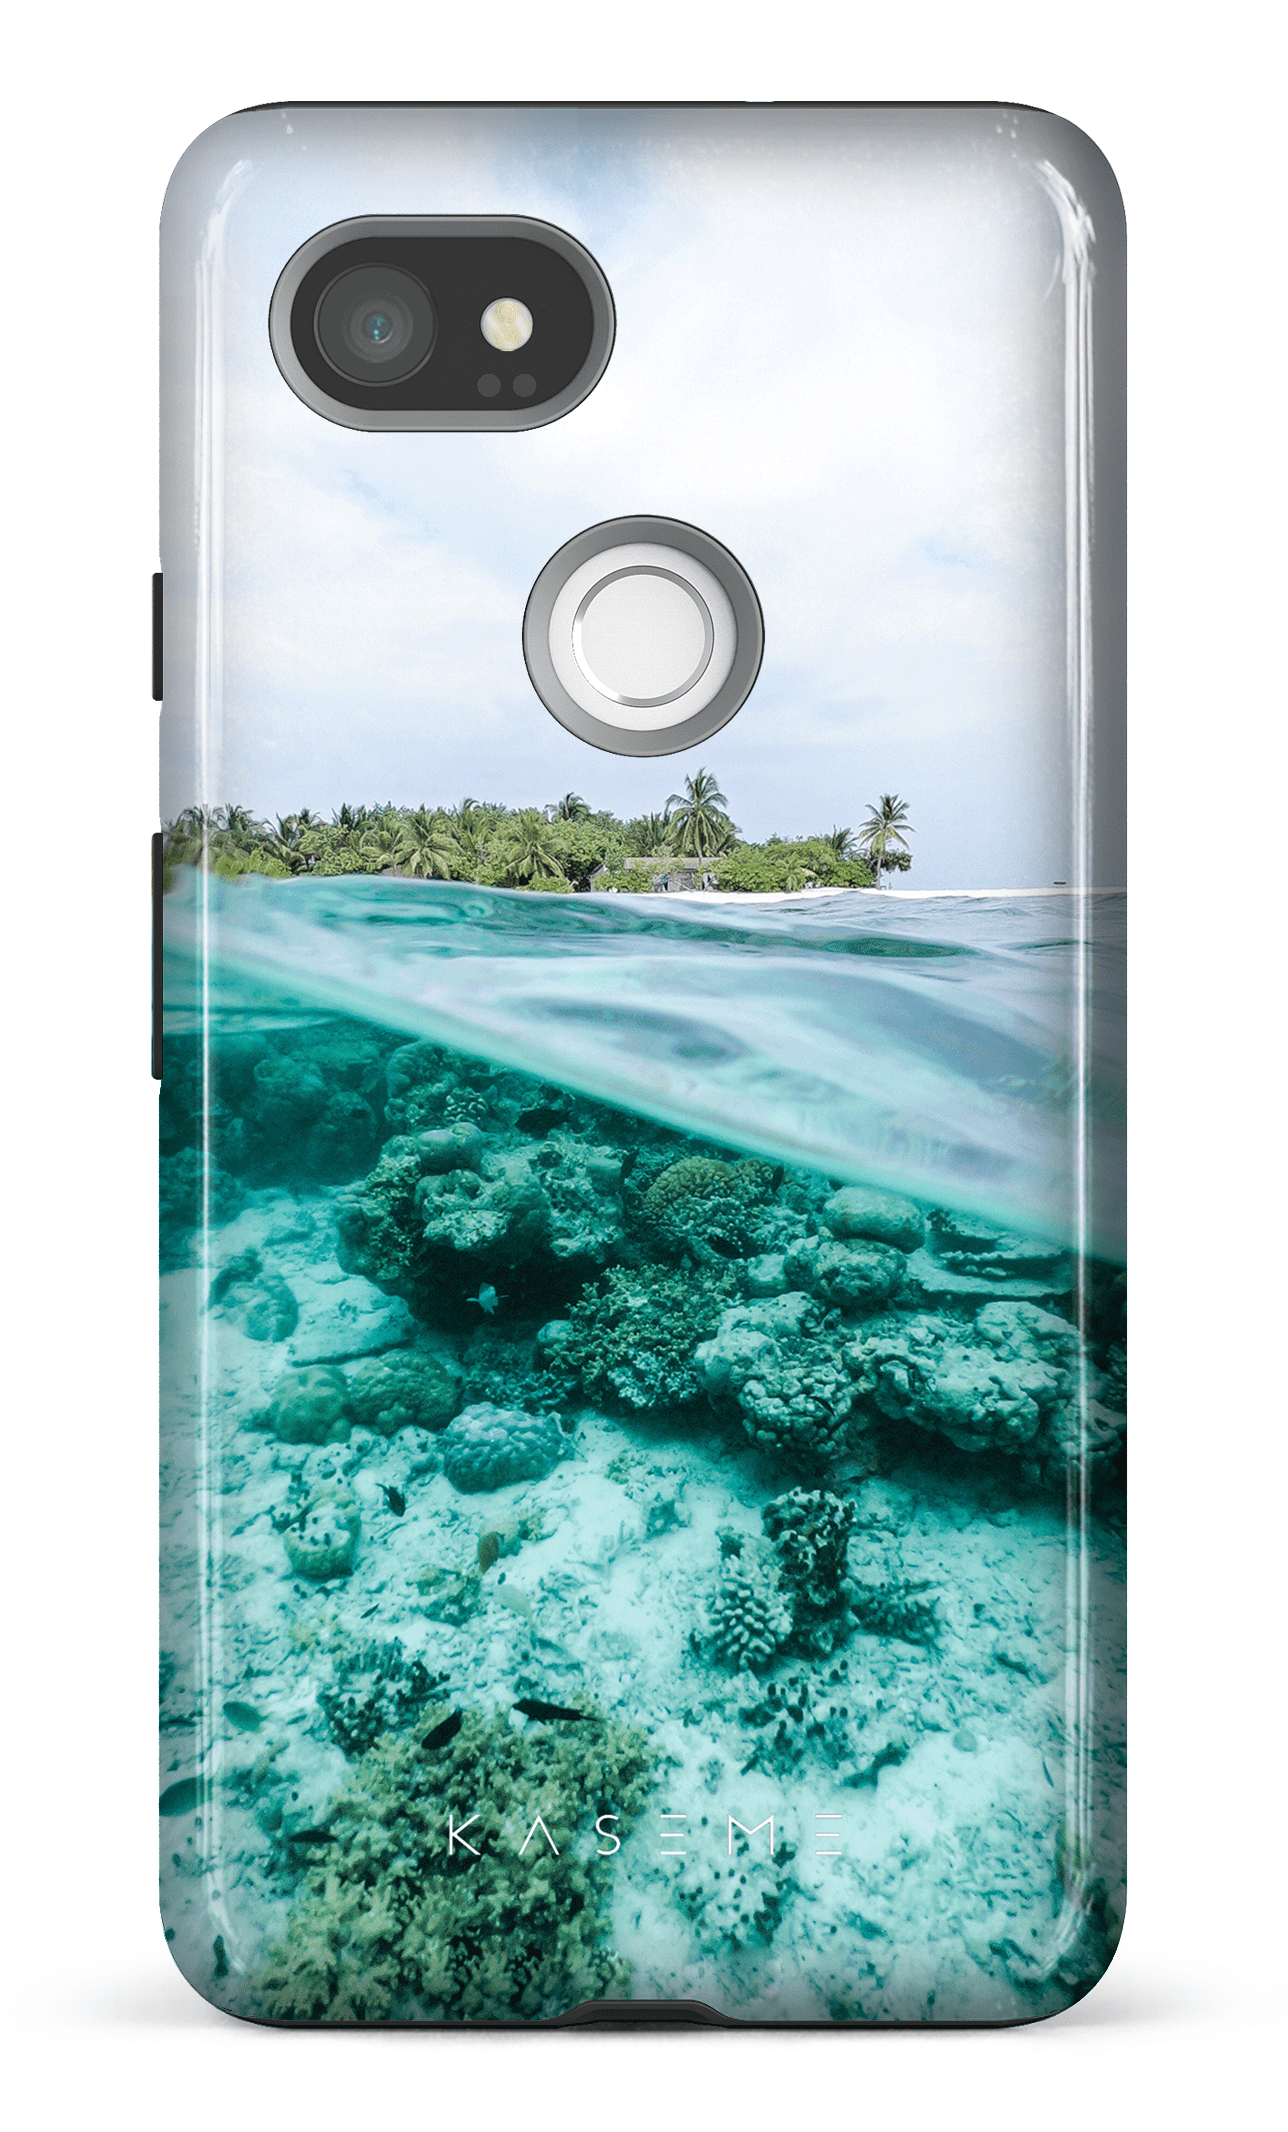 Polynesia phone case - Google Pixel 2 XL